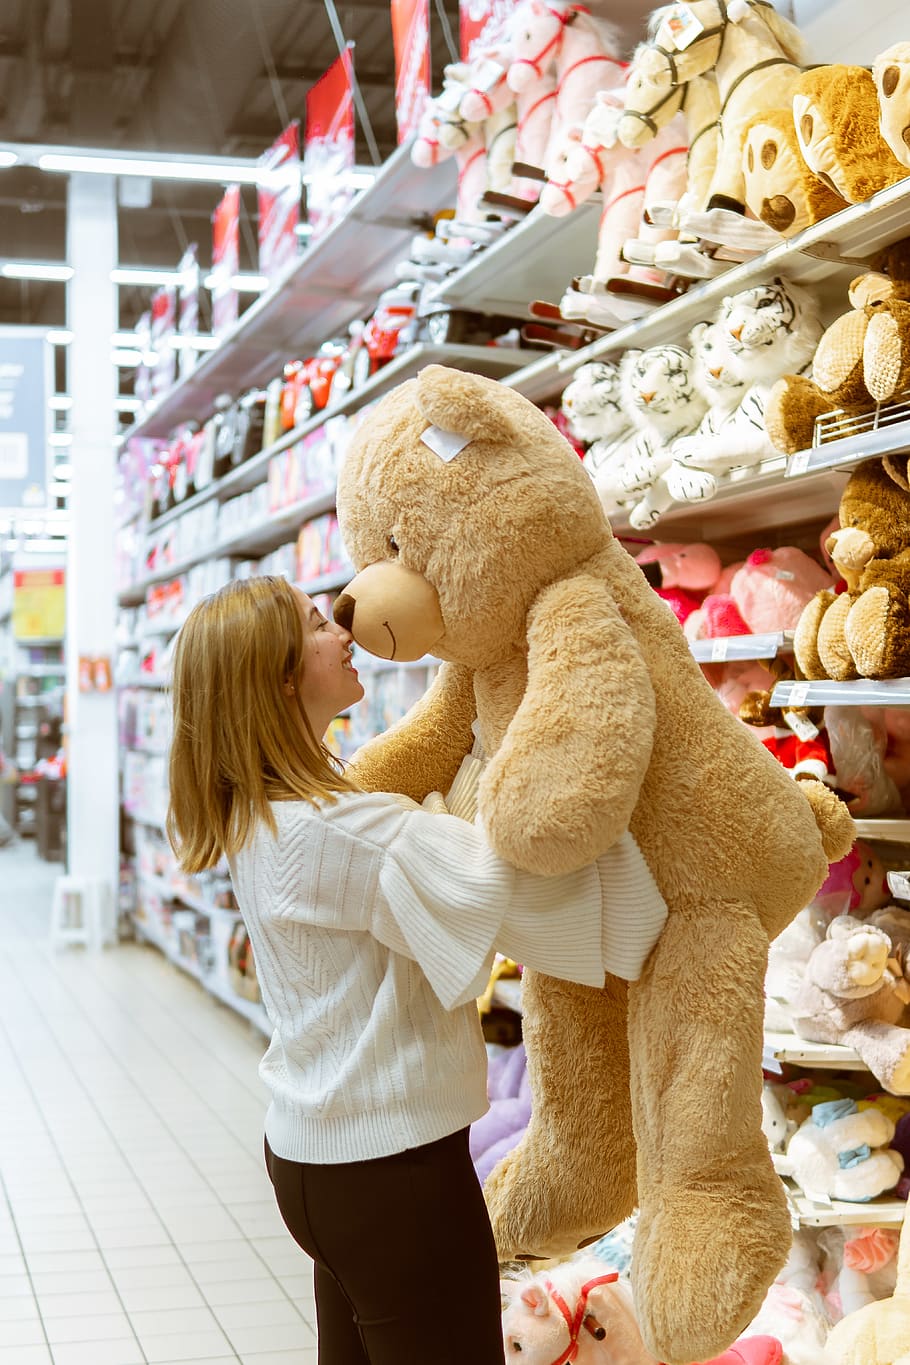 HD wallpaper: woman carrying life size bear plush toy, shop, teddy ...